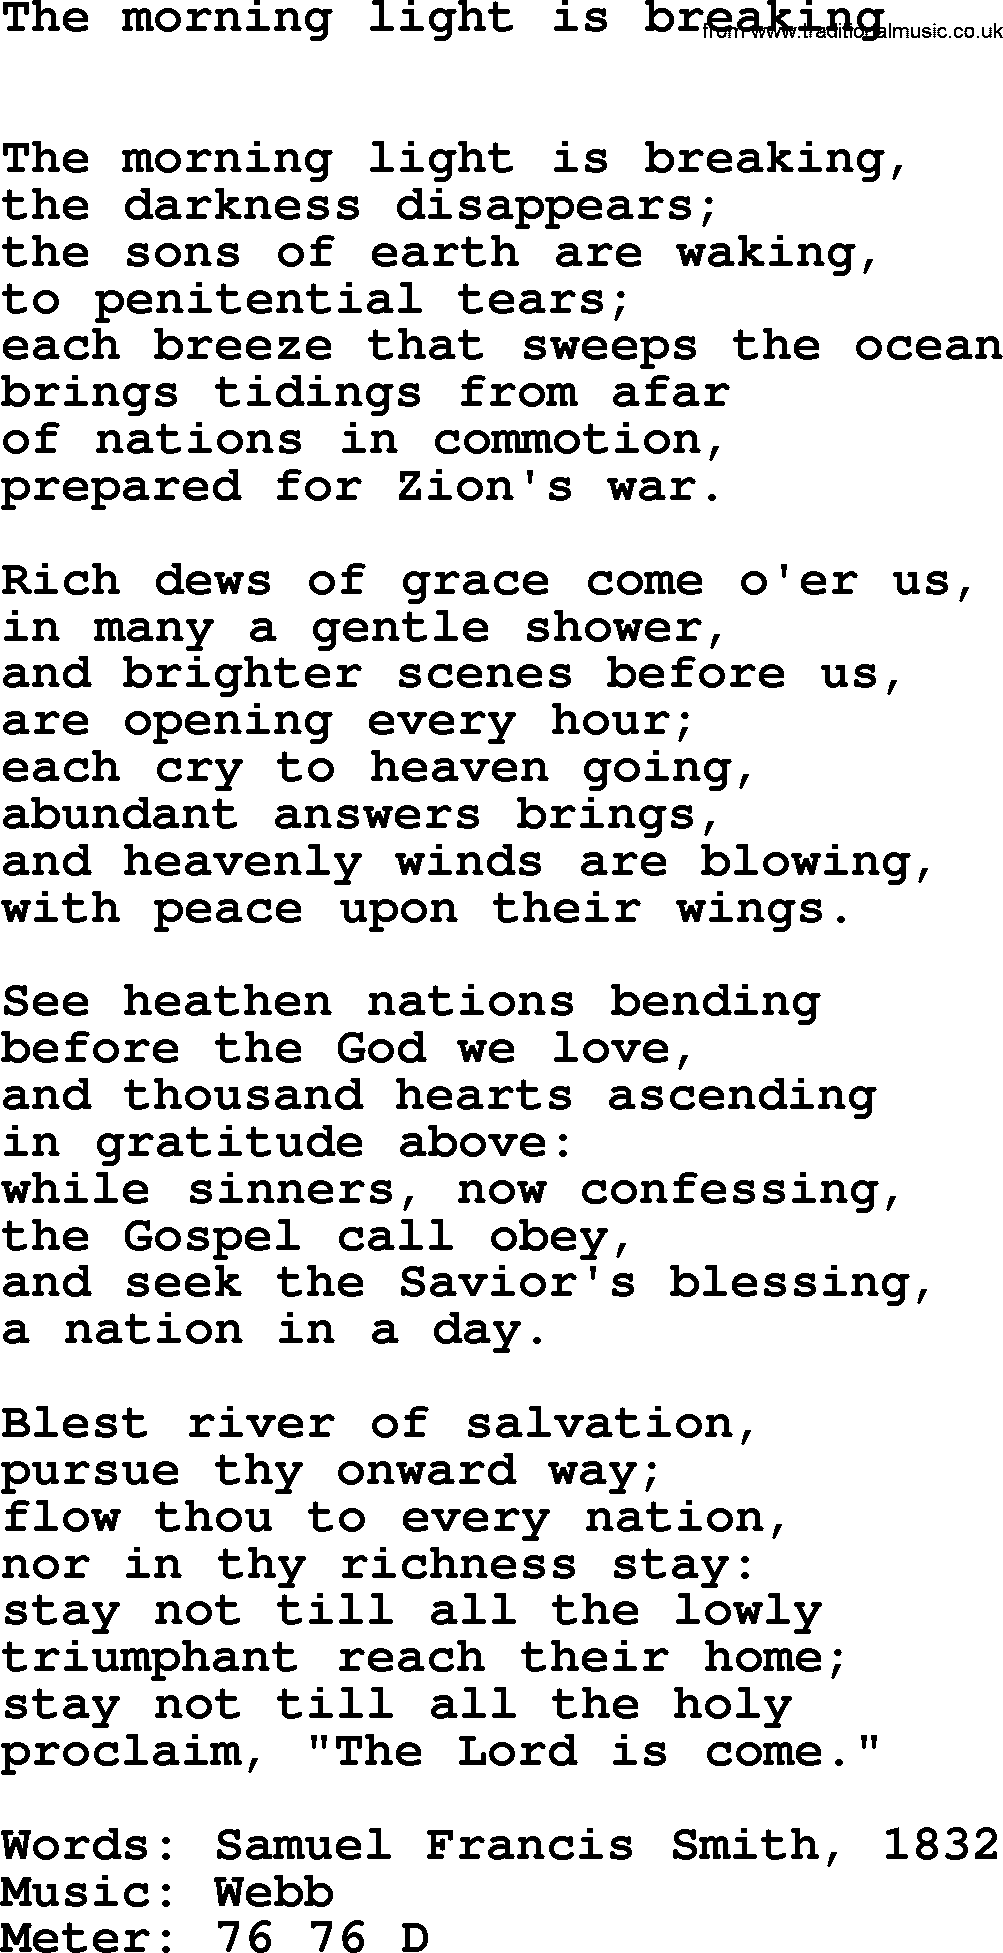 Book of Common Praise Hymn: The Morning Light Is Breaking.txt lyrics with midi music